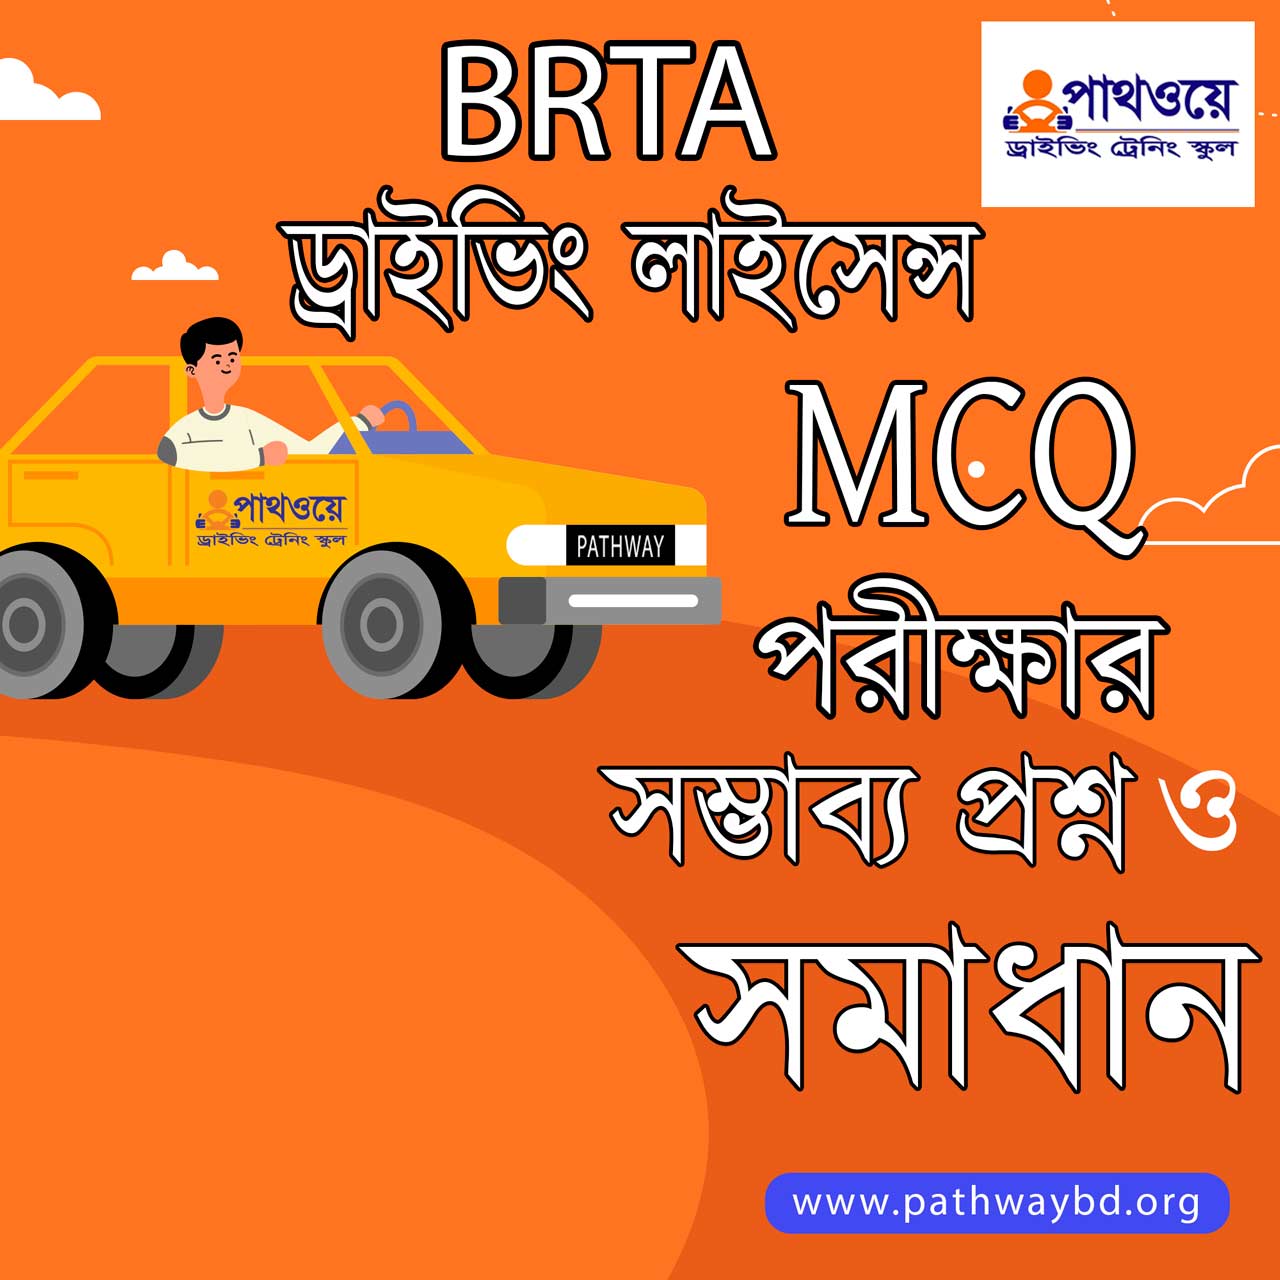 BRTA road traffic signs Bangladesh driving license exam questions 